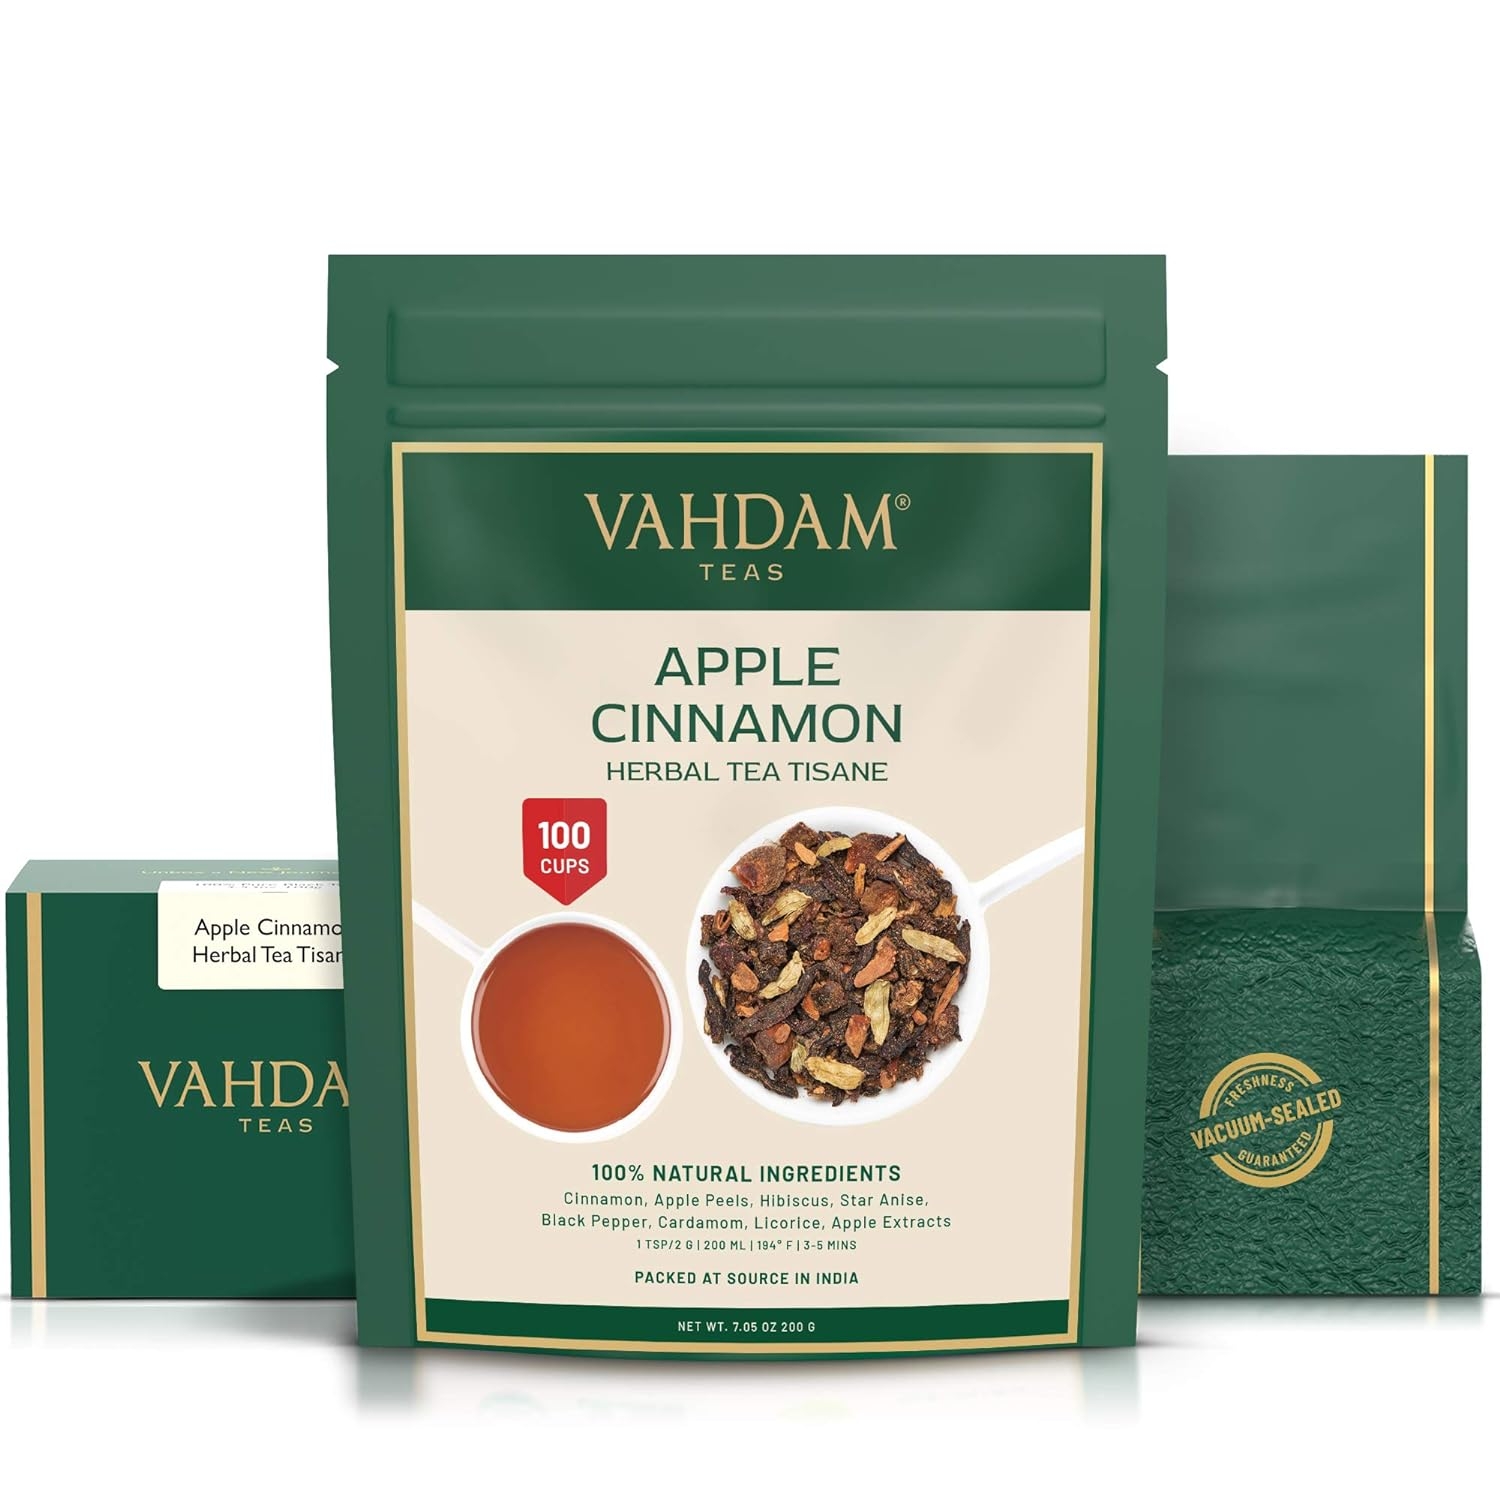 VAHDAM's Apple Cinnamon Herbal Tea Tisane - Set of 2 (3.5oz each) | Apple + Cinnamon + Hibiscus + Pepper & more | TROPICAL & FRUITY ICED TEA | 100+ Cups - Brew Hot or Cold | 100% Natural Ingredients